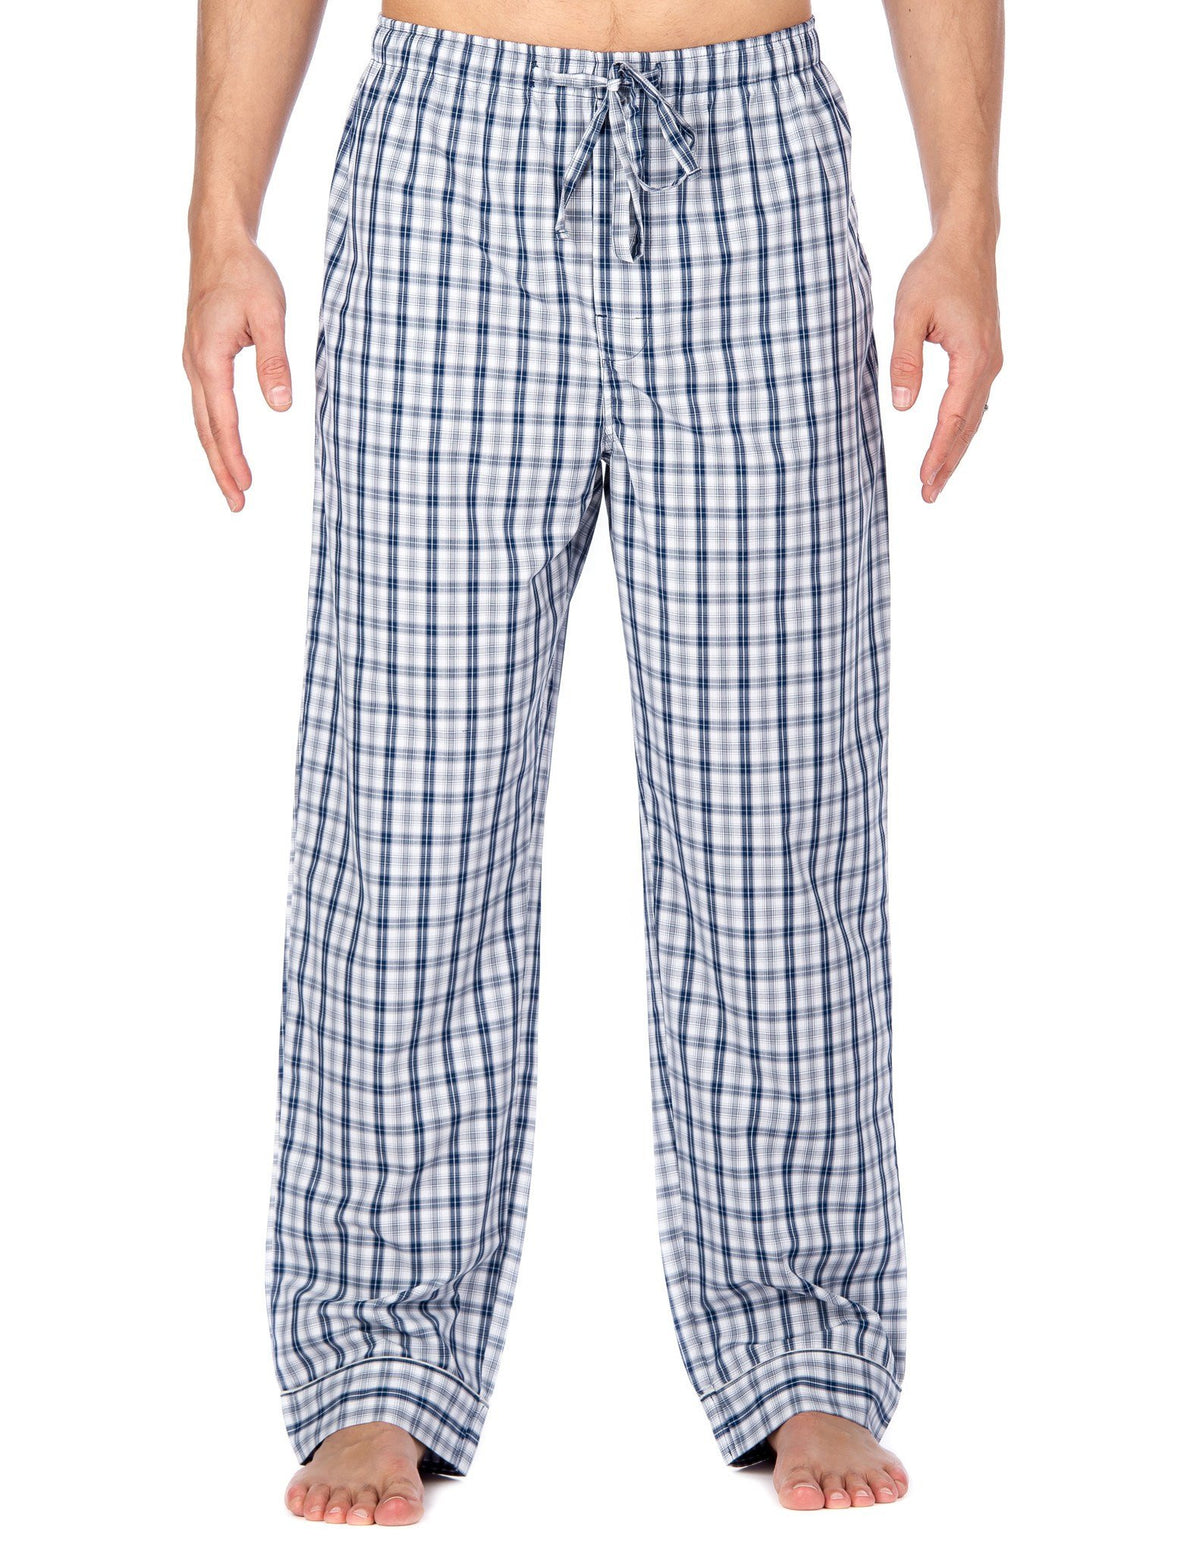 Men's Bamboo Sleep/Lounge Pants - Plaid Blue-White-Gray